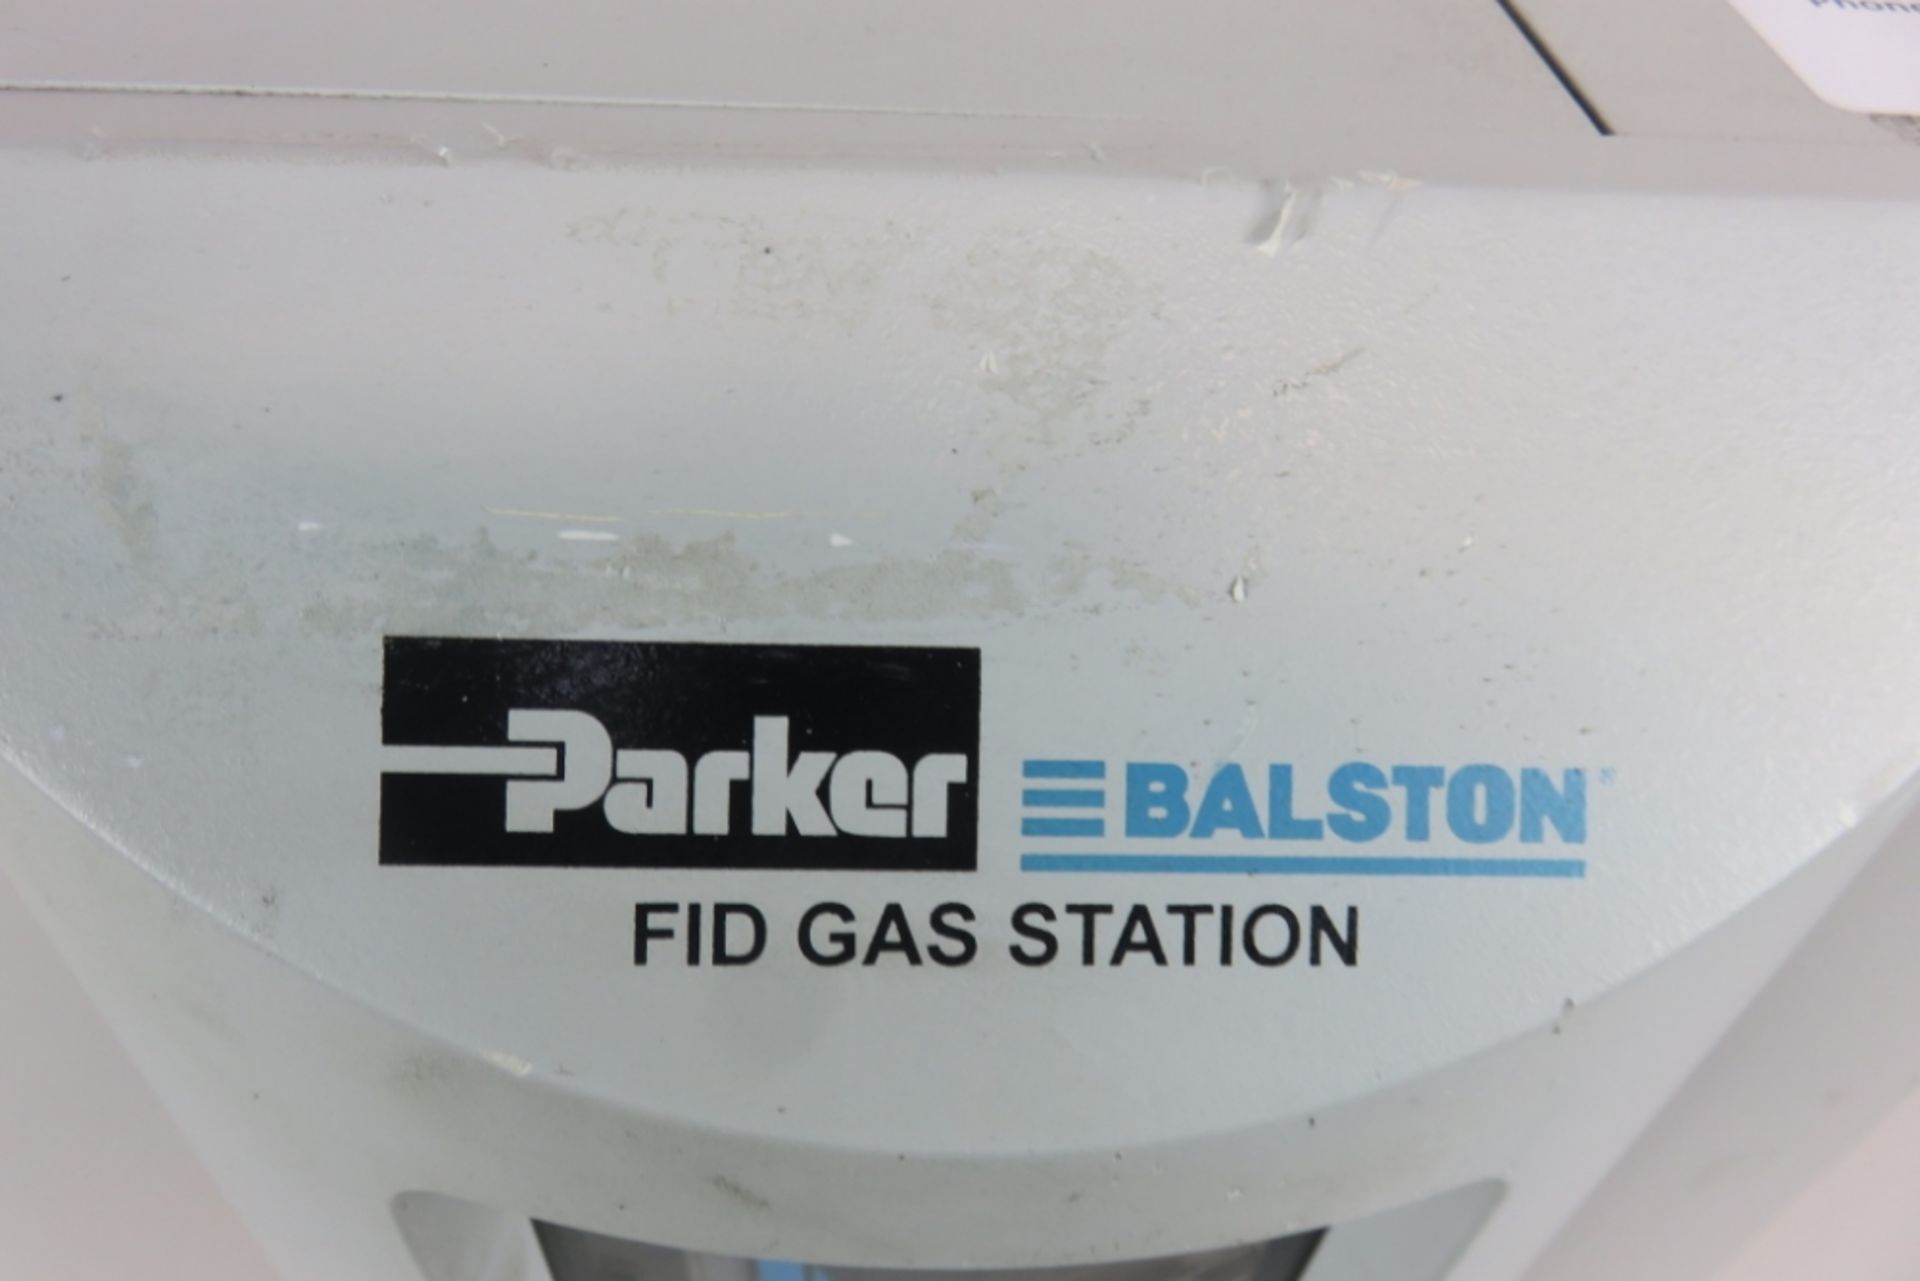 Parker Balston FID Gas Station - Image 6 of 7